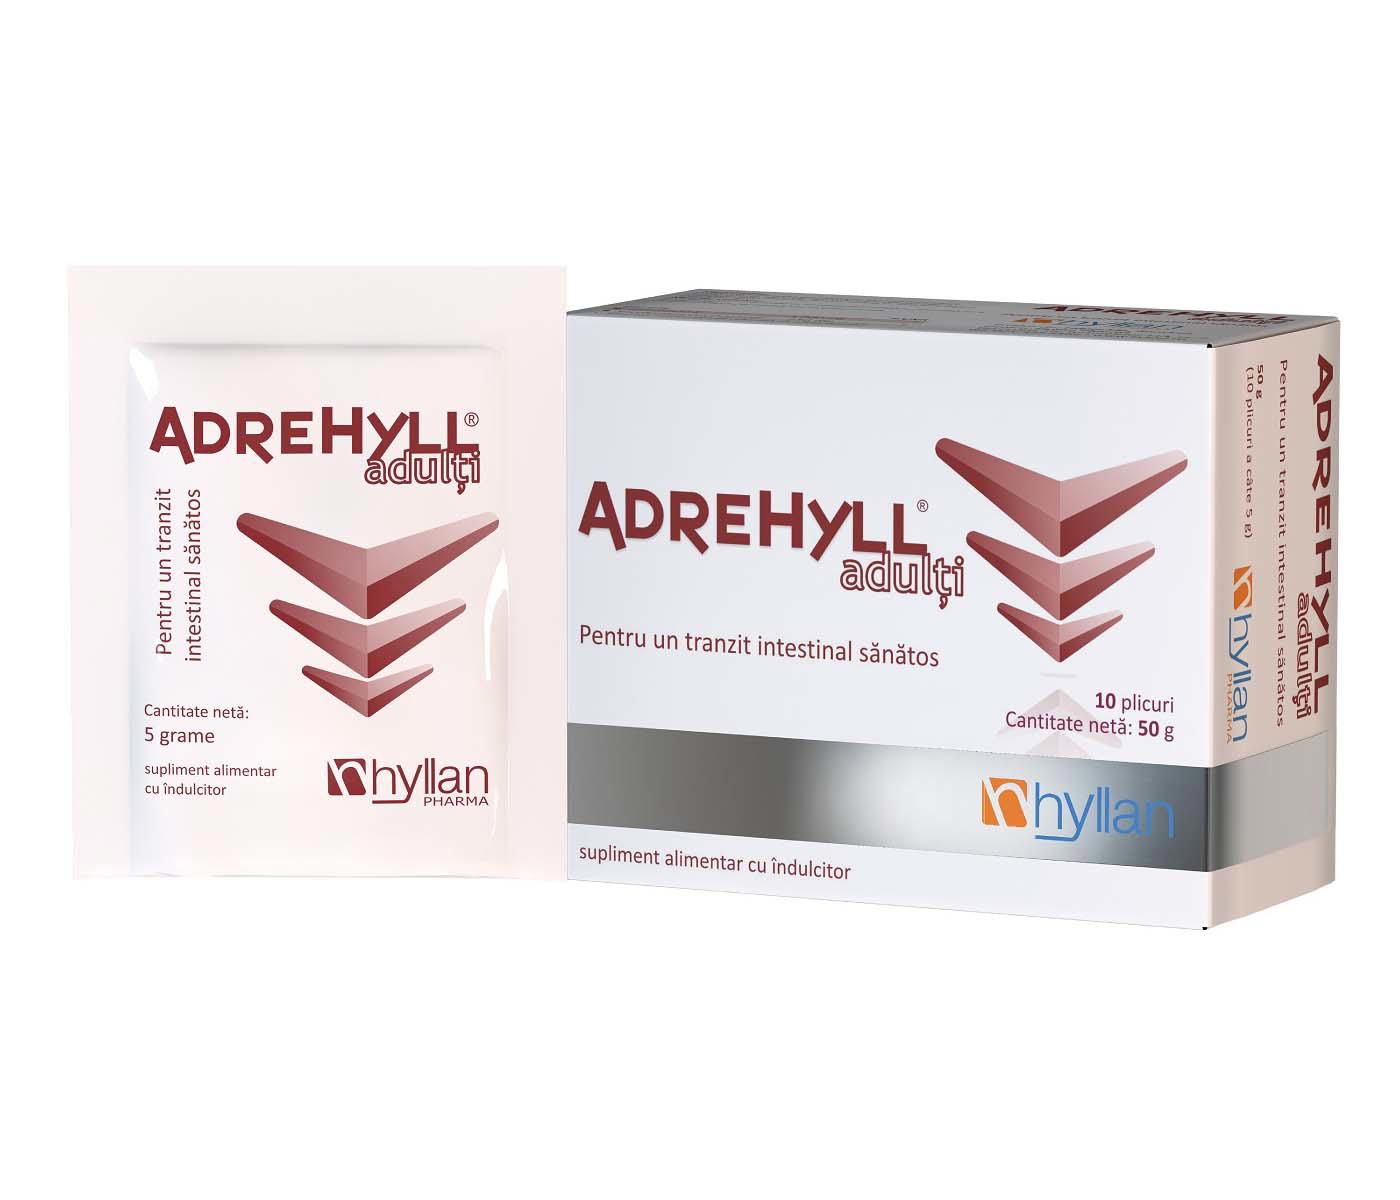 Adrehyll Adulti 10 plicuri Hyllan